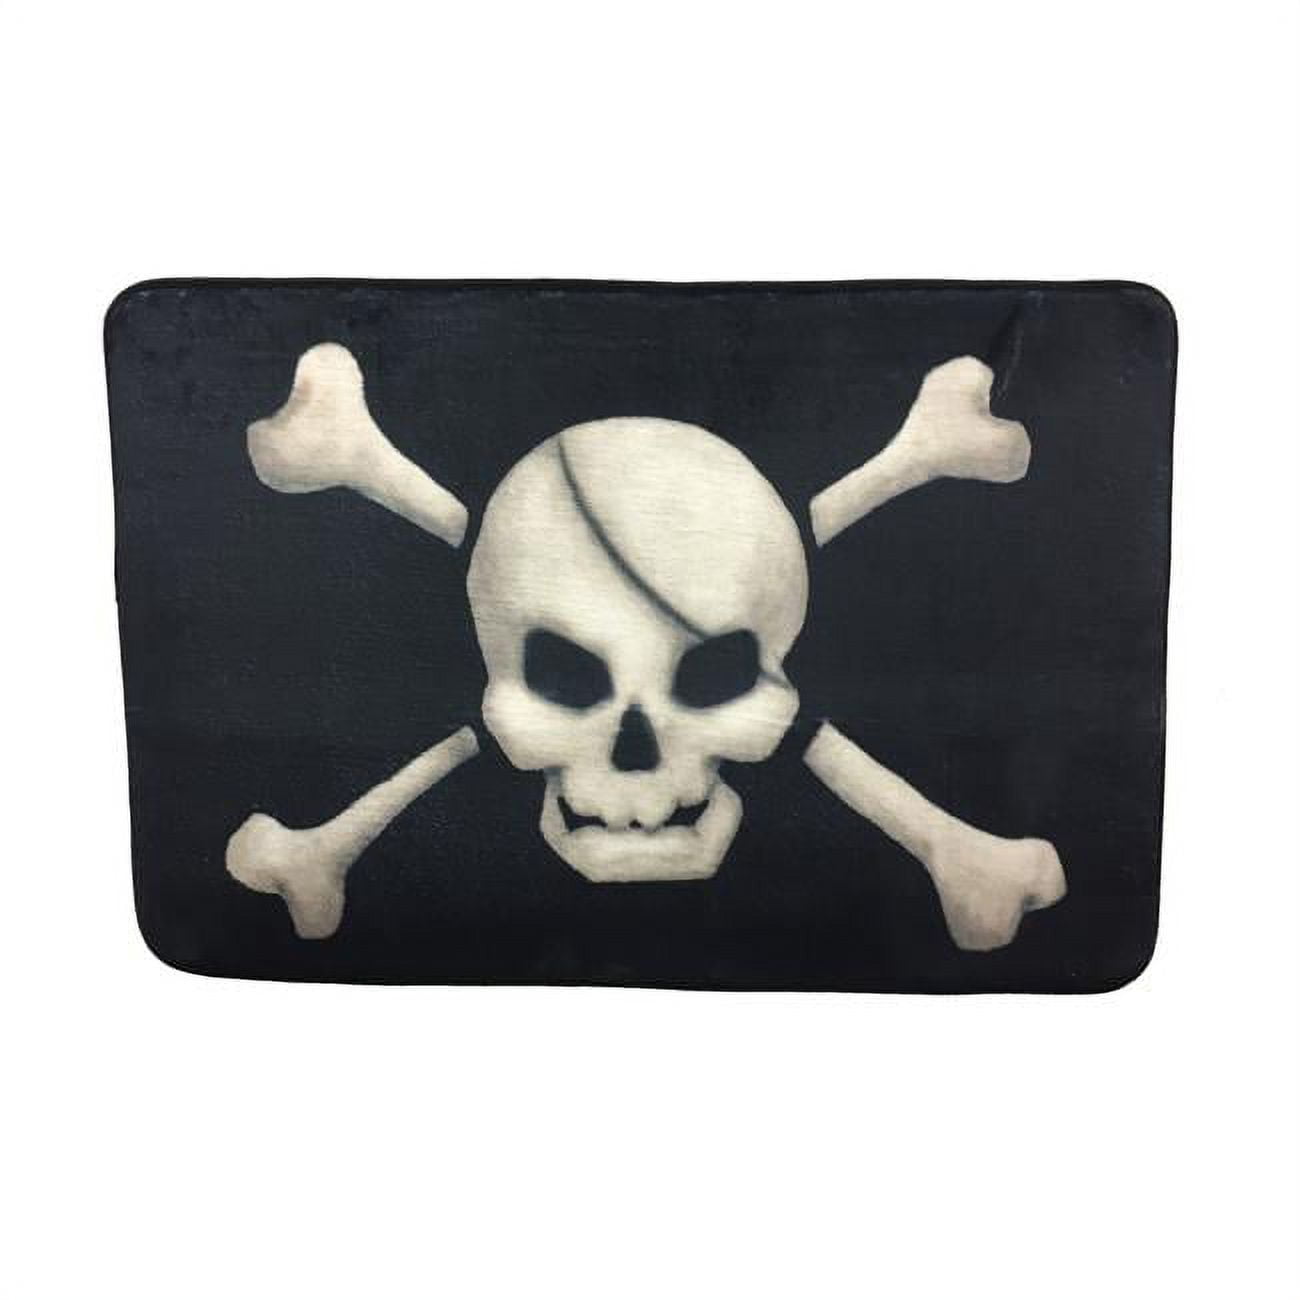 90018 Pirates Treasure Skull Bathroom Mat